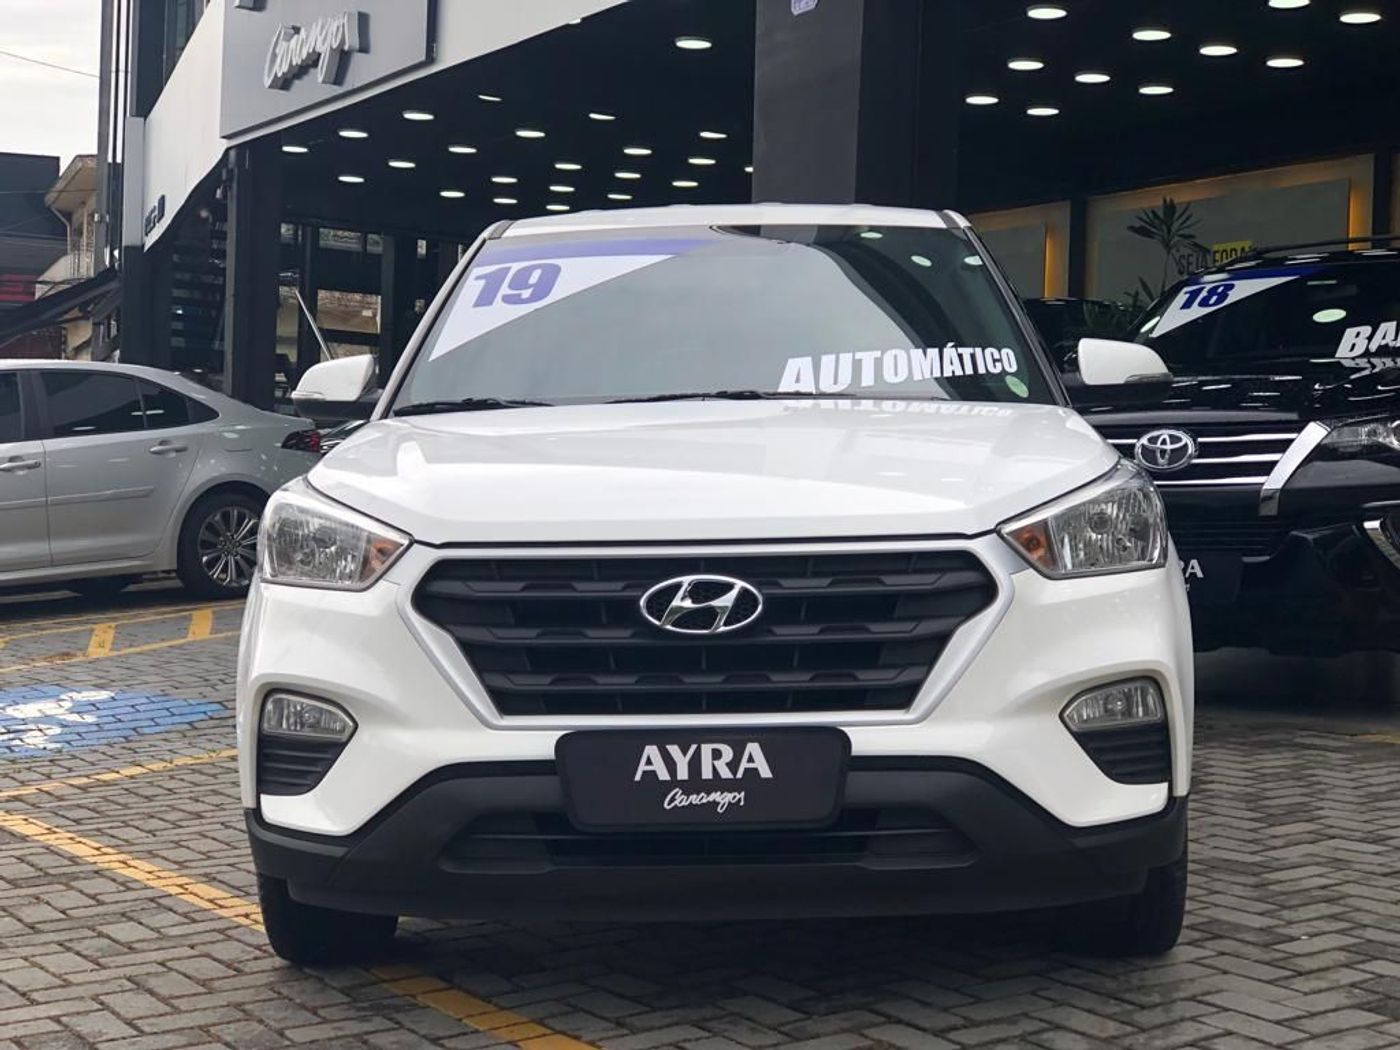 Hyundai Creta Attitude 1.6 16V Flex Aut.